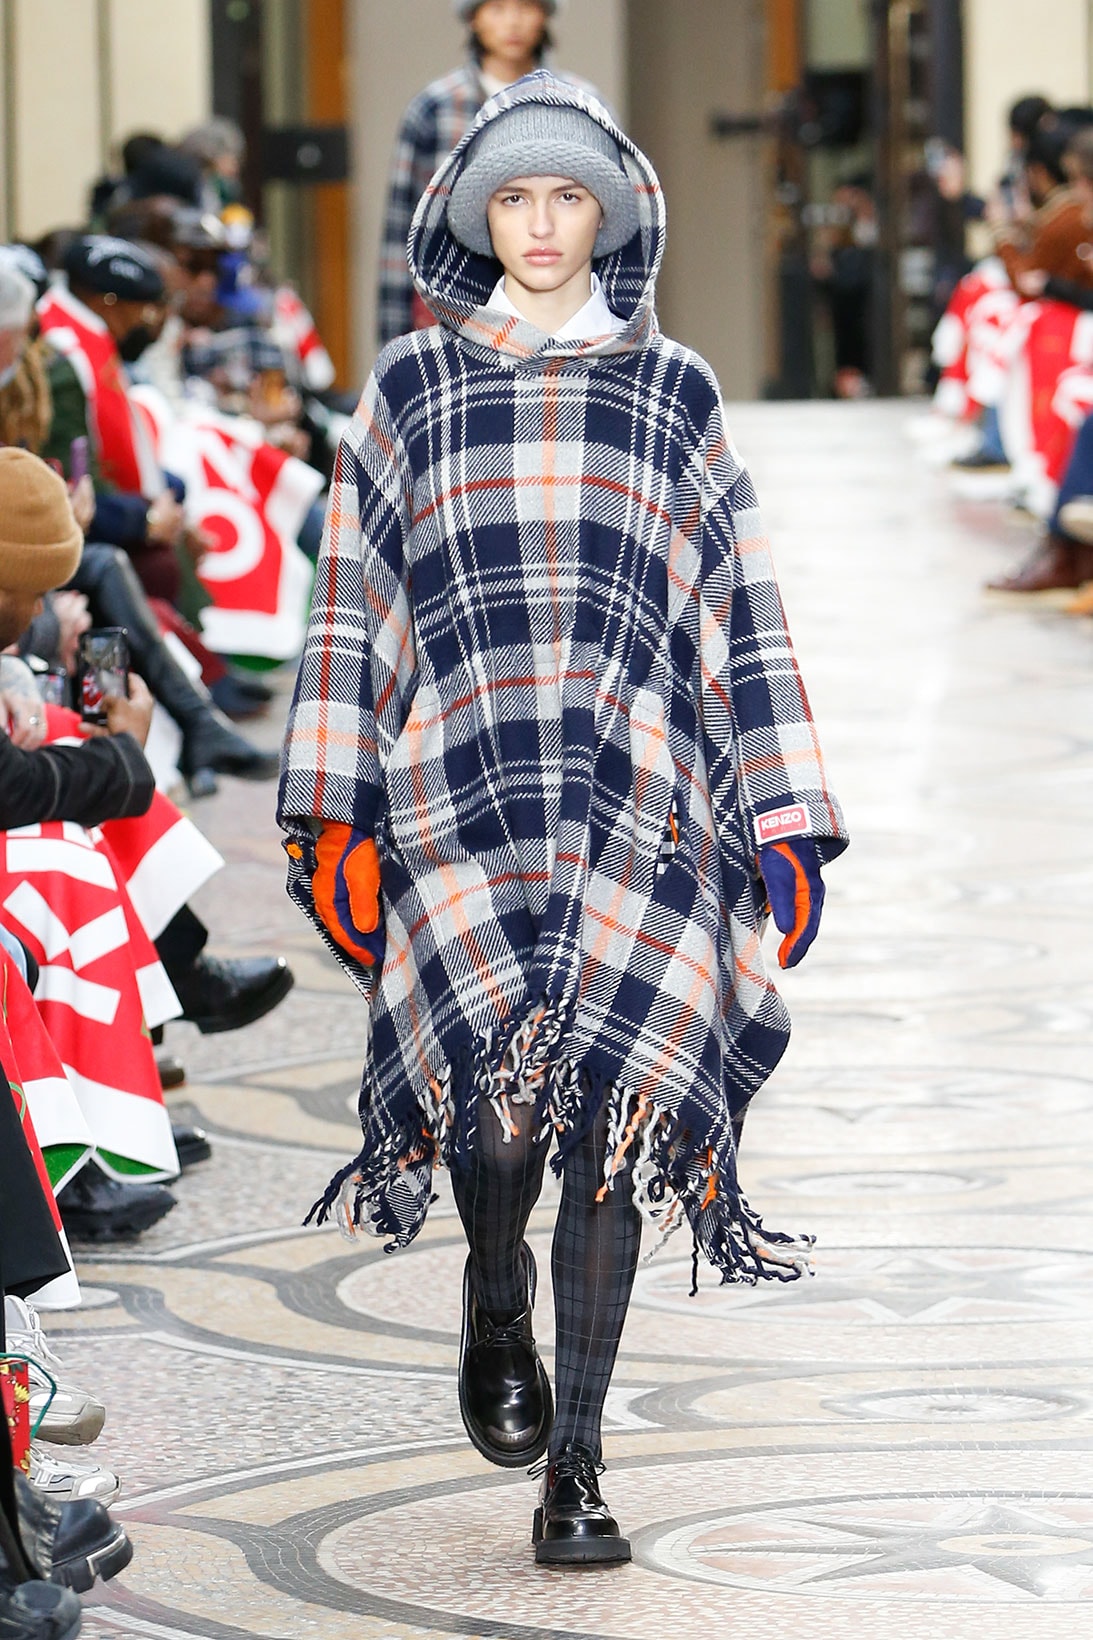 Nigo's Kenzo Debut for Autumn/Winter 22/23 At Paris Fashion Week 